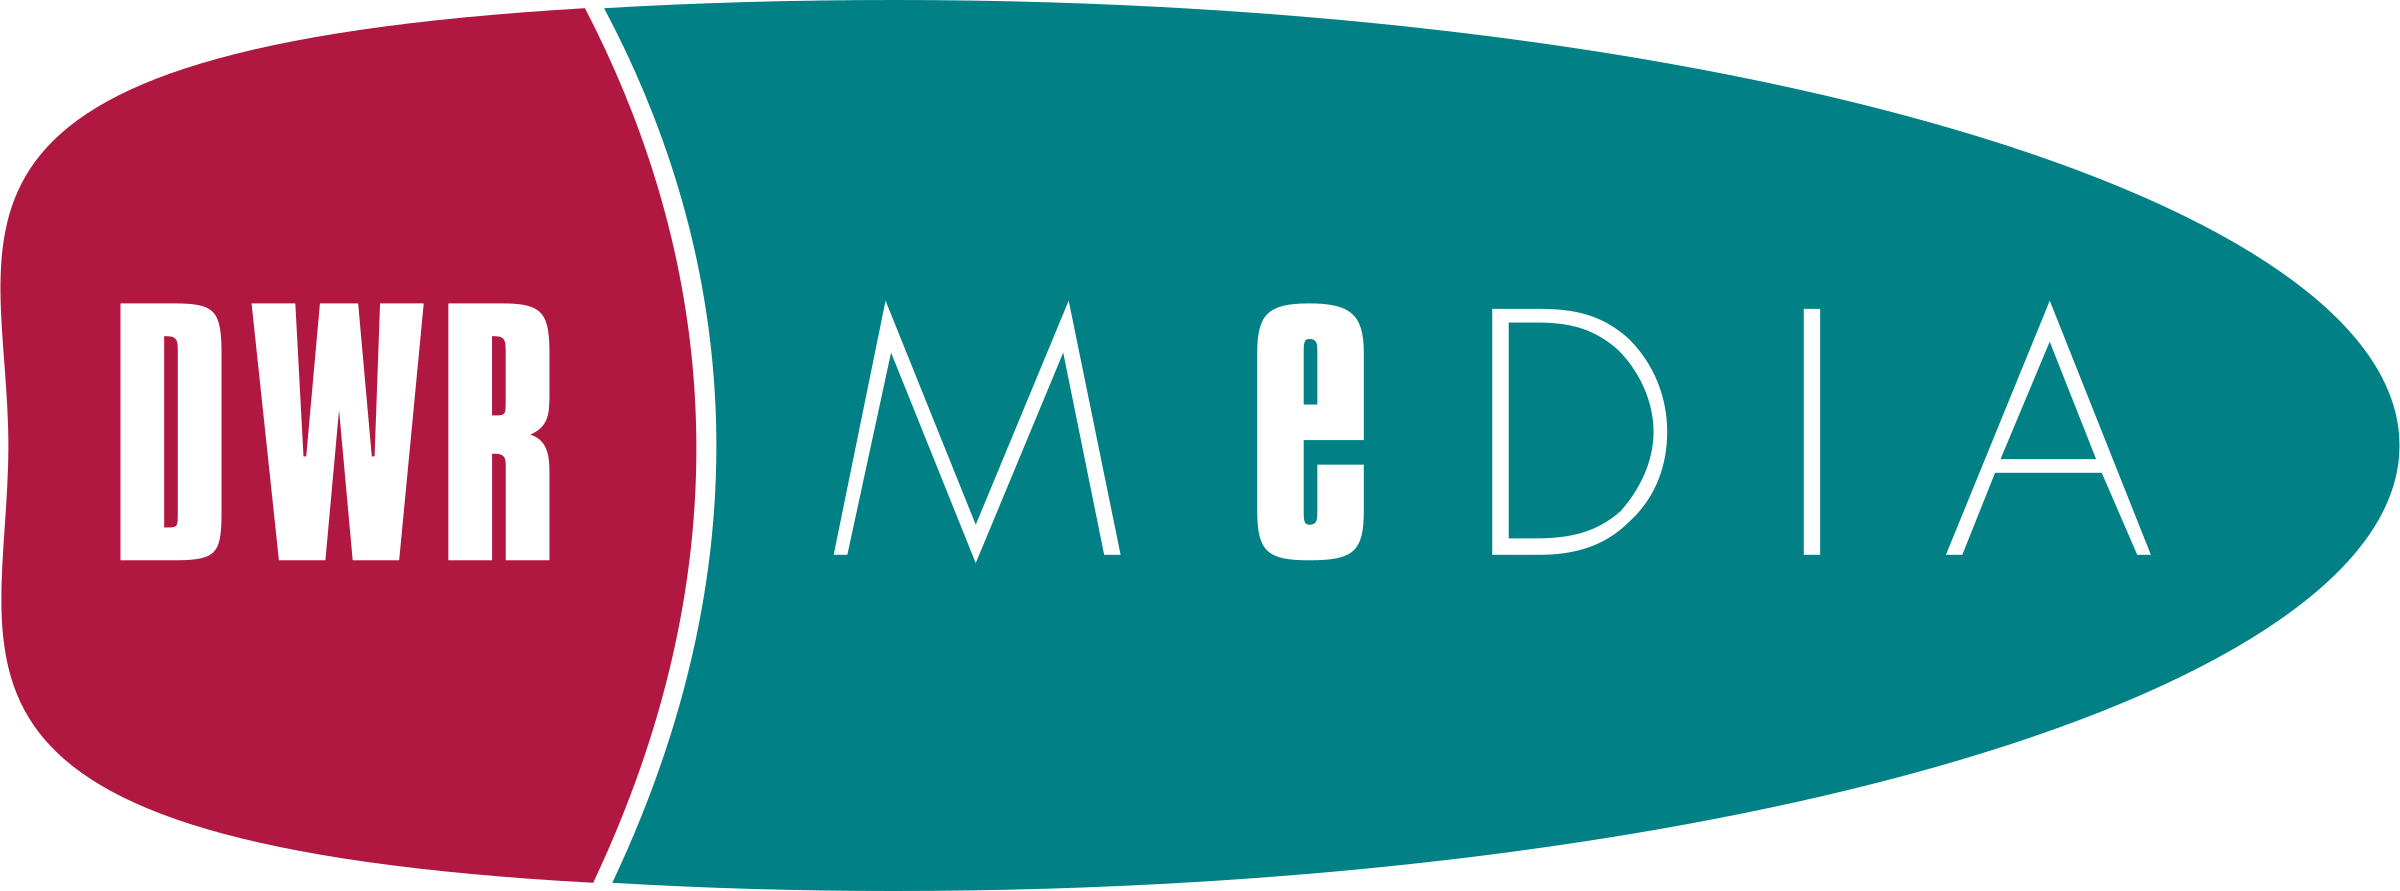 DWR Logo - DWR MEDIA Logo PNG Transparent & SVG Vector